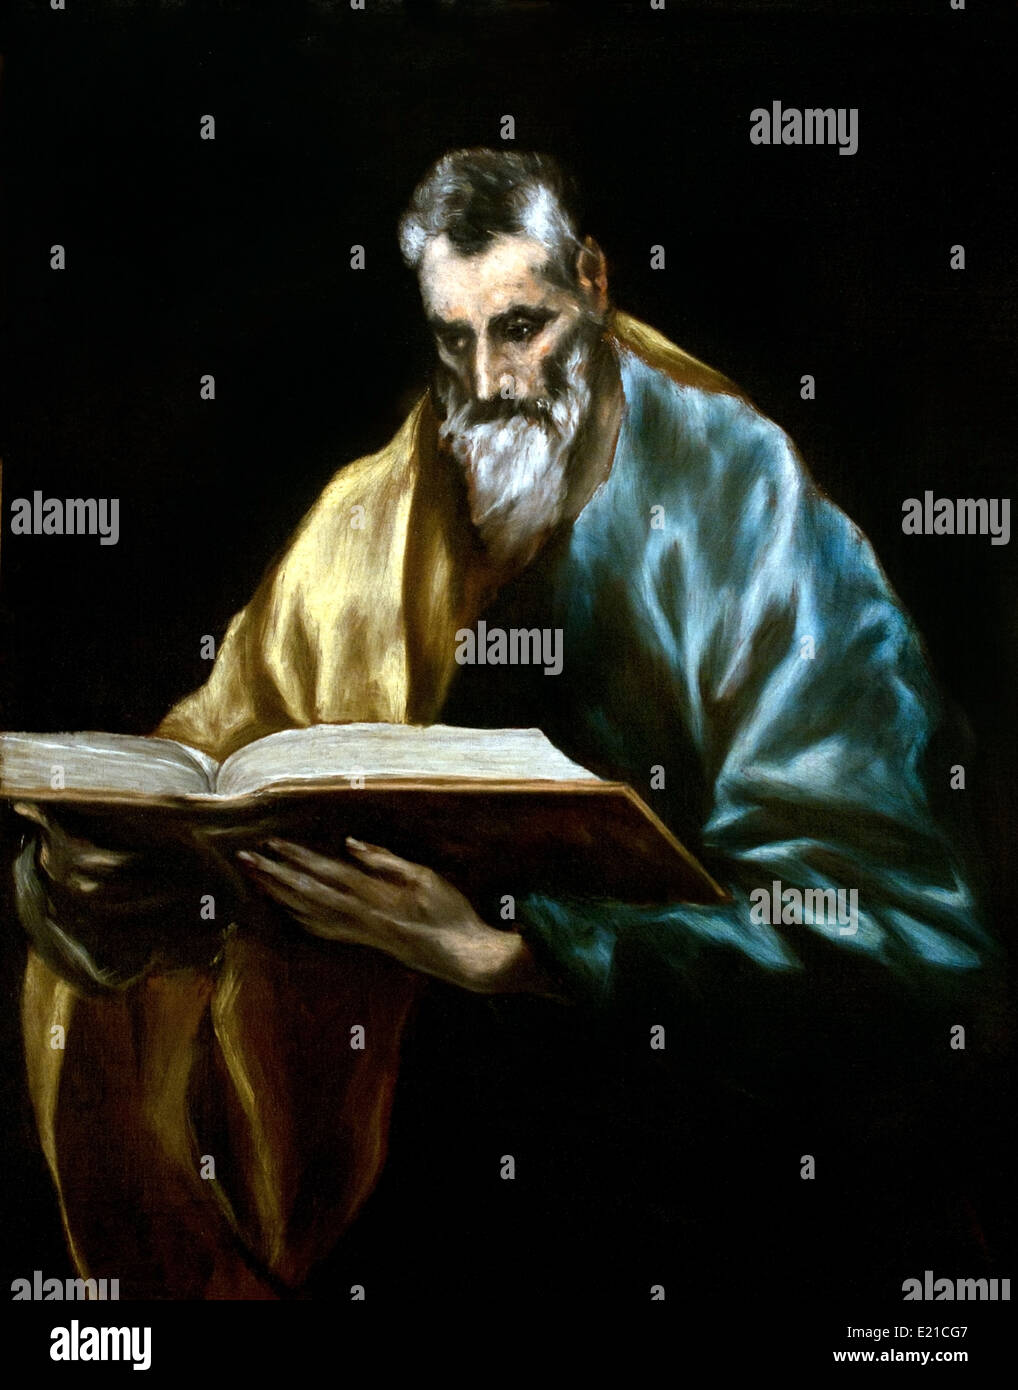 Apostolo San Simon 1610-14 El Greco Dominikos Theotokopoulos (Creta 1541 Toledo 1614) SPAGNOLO GRECO Foto Stock